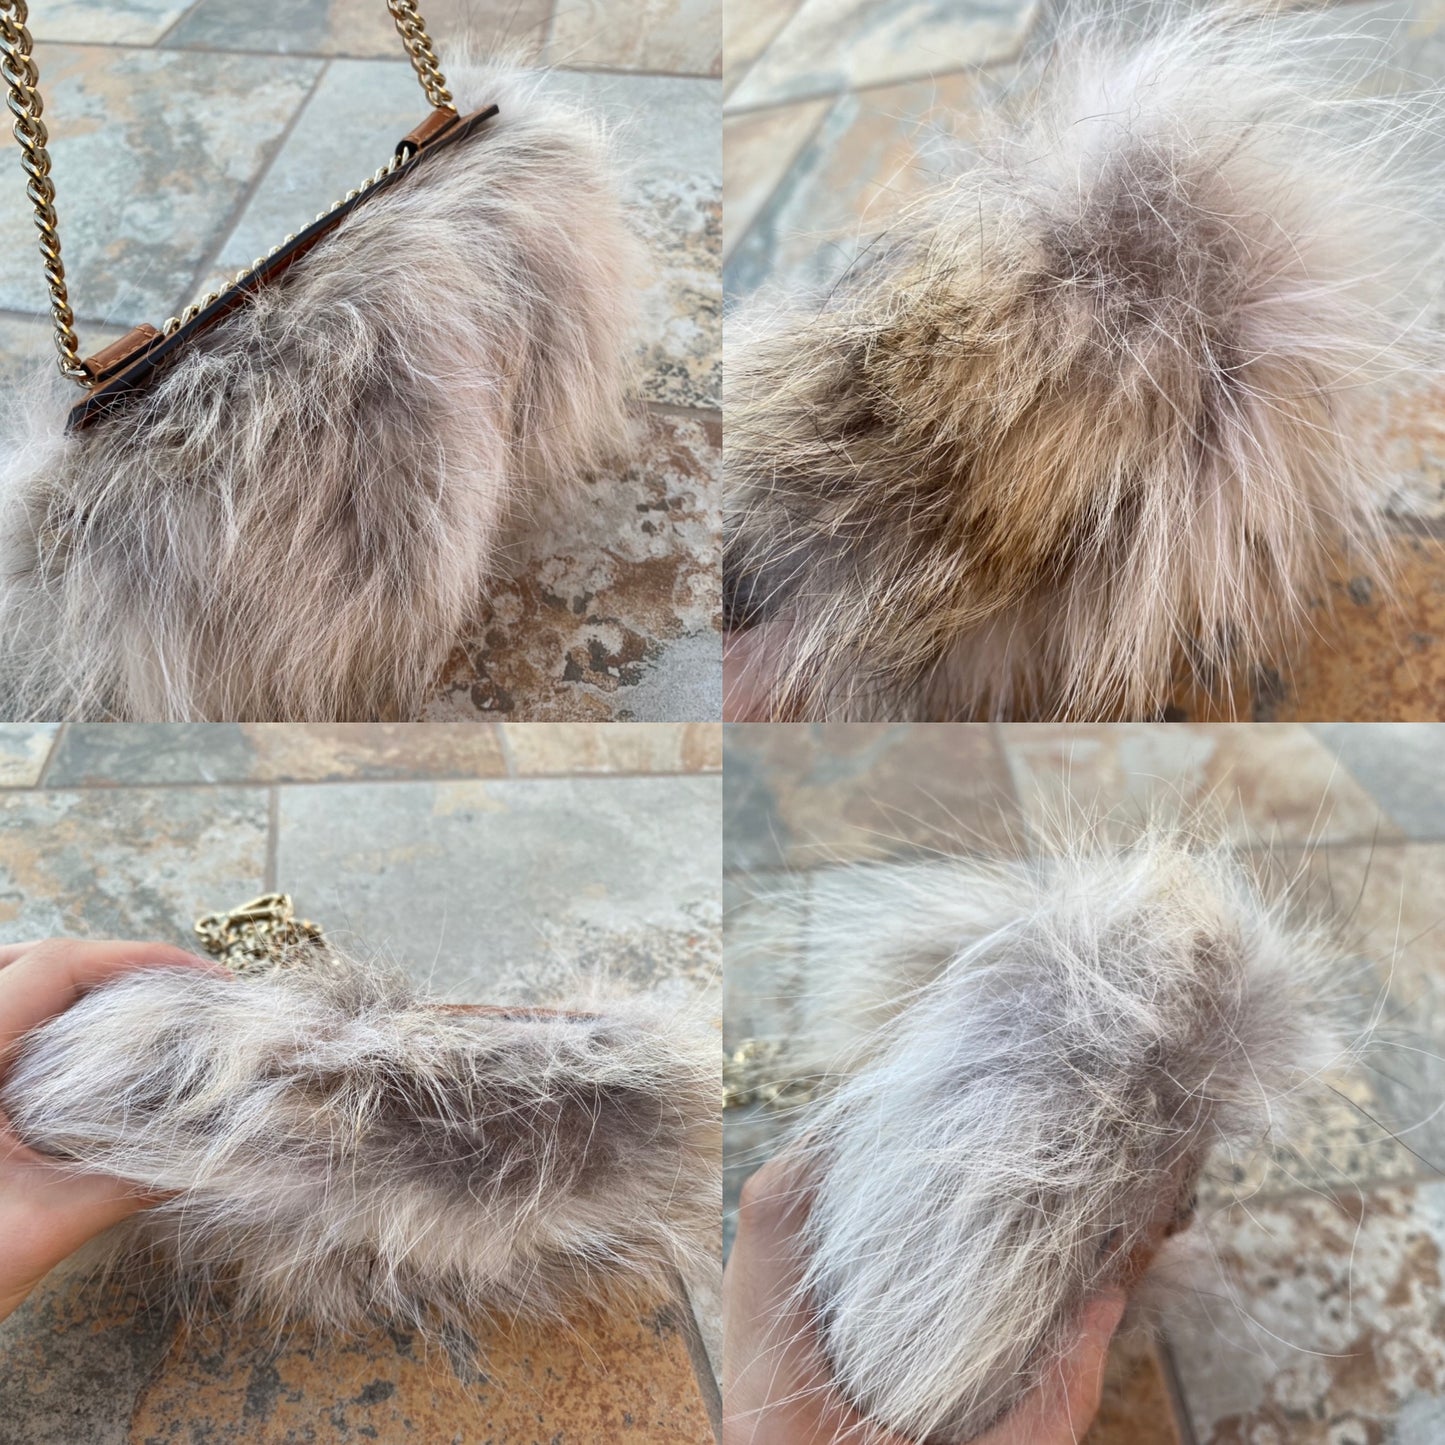 Chloé Georgia Fur Crossbody Flap Bag